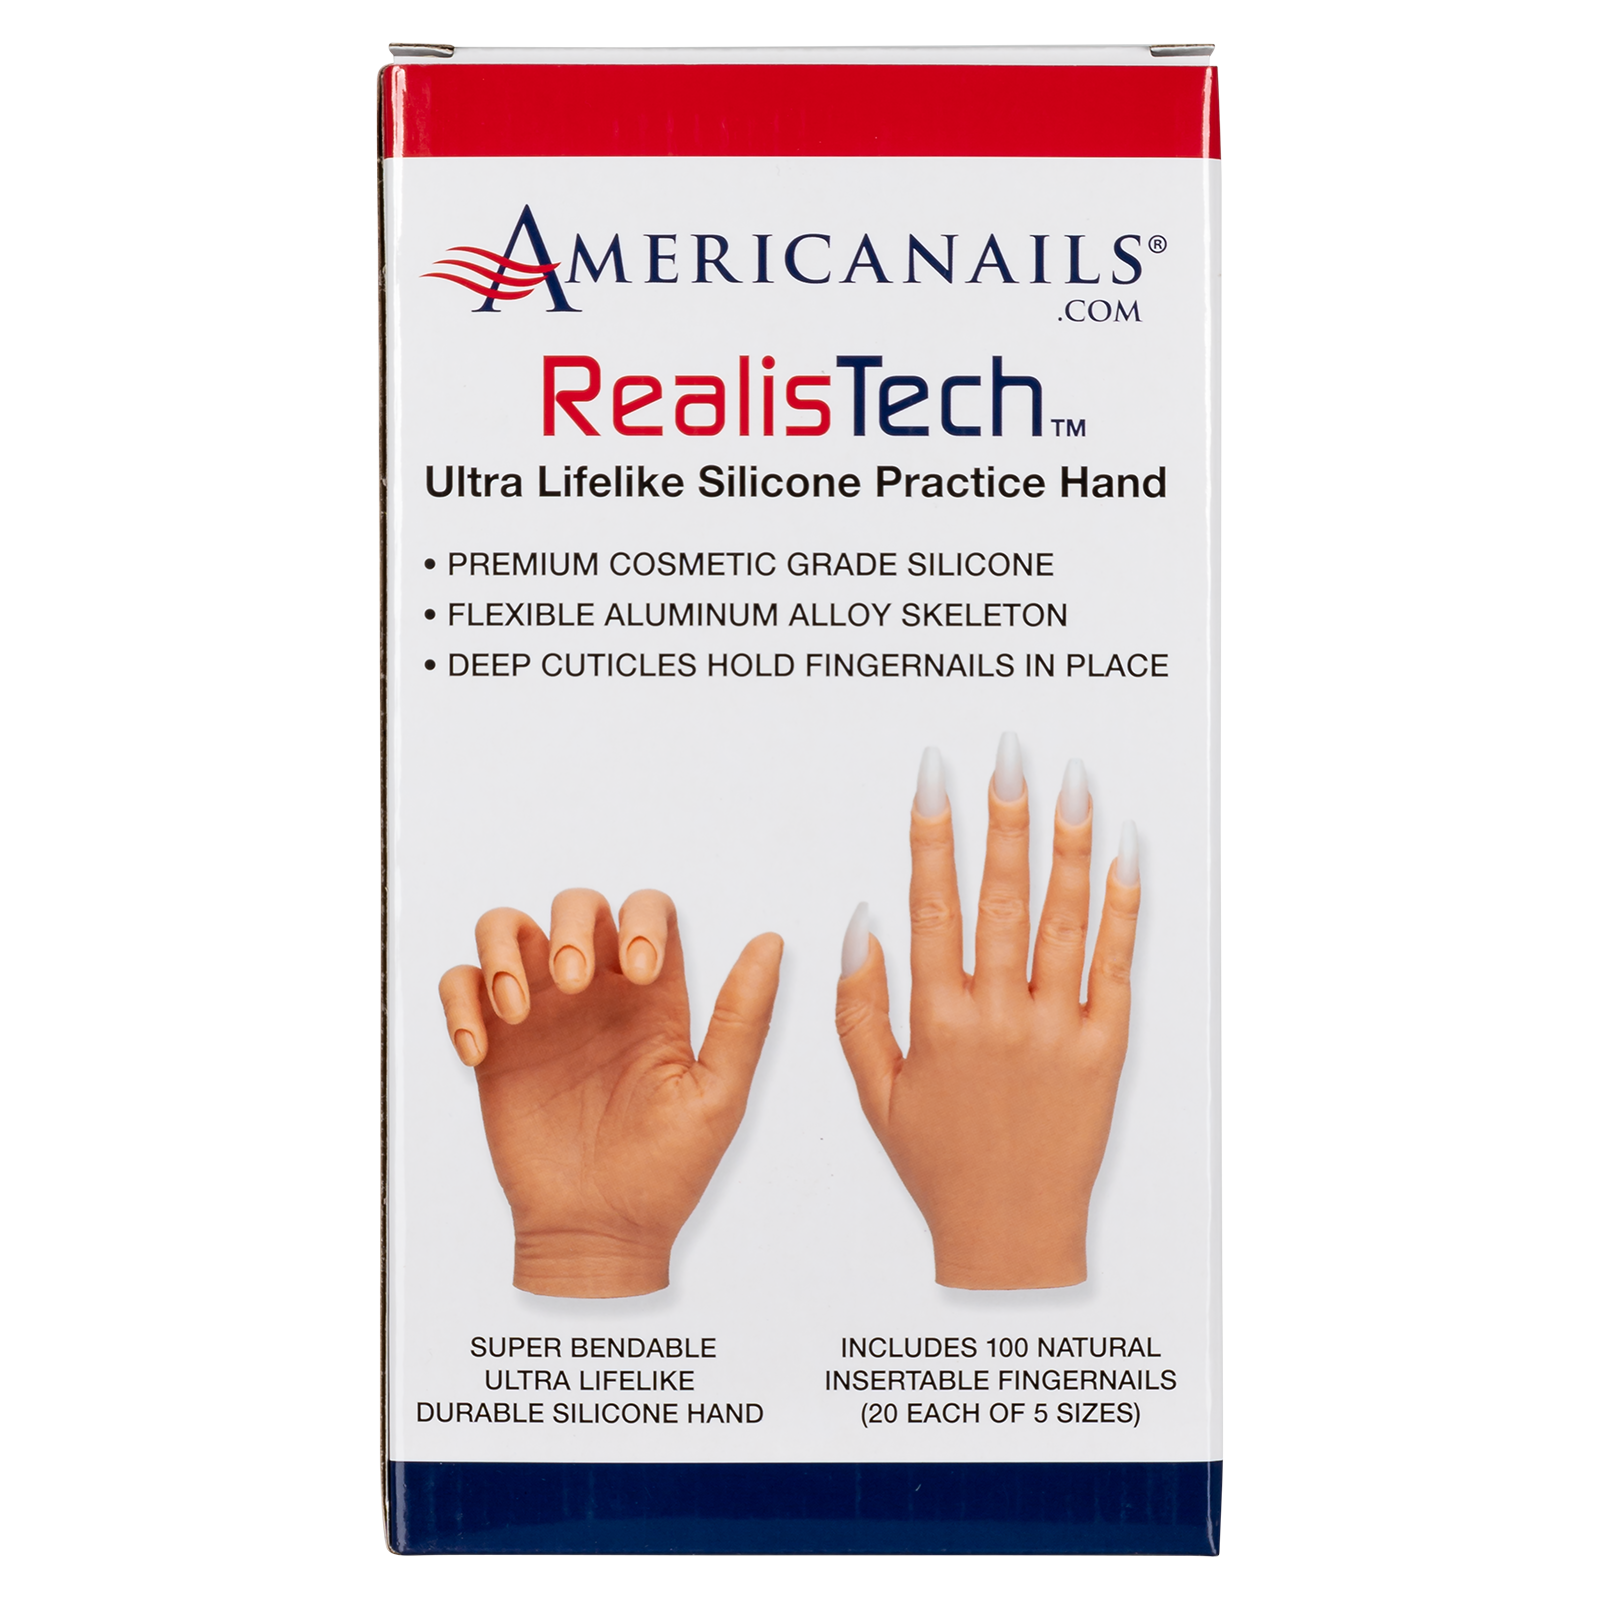 Americanails RealisTech Ultra LifeLike Silicone Practice Hand w/ FlexiArm